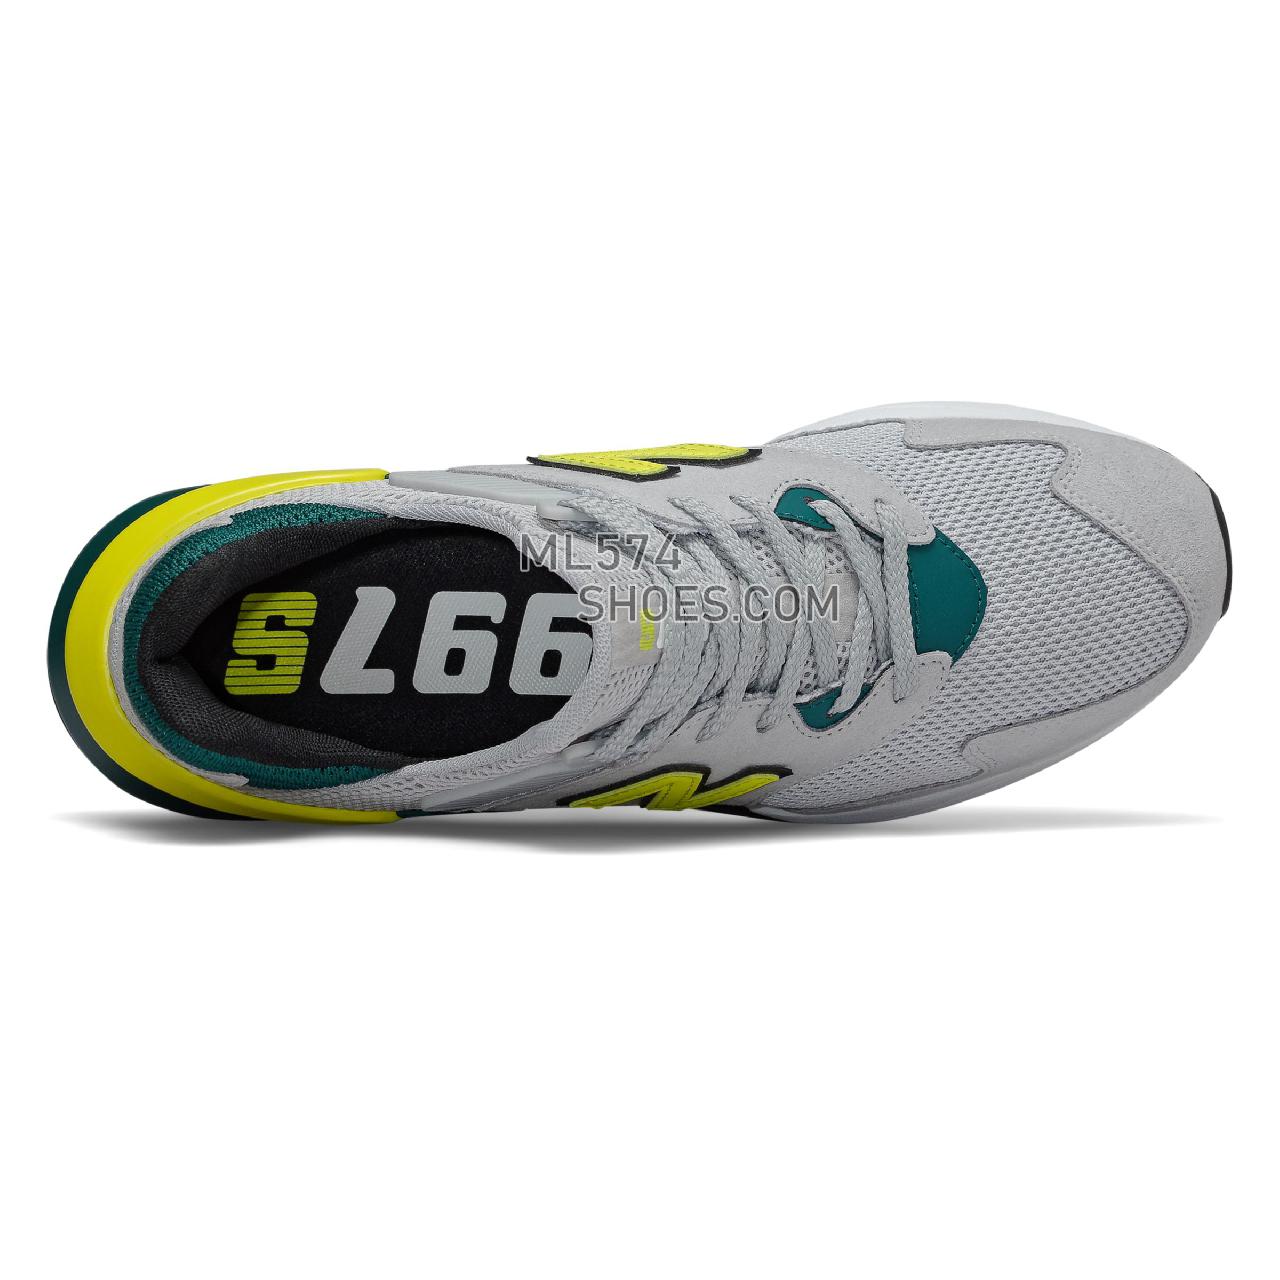 New Balance 997 Sport - Men's Sport Style Sneakers - Light Aluminum with Sulphur Yellow - MS997JKA